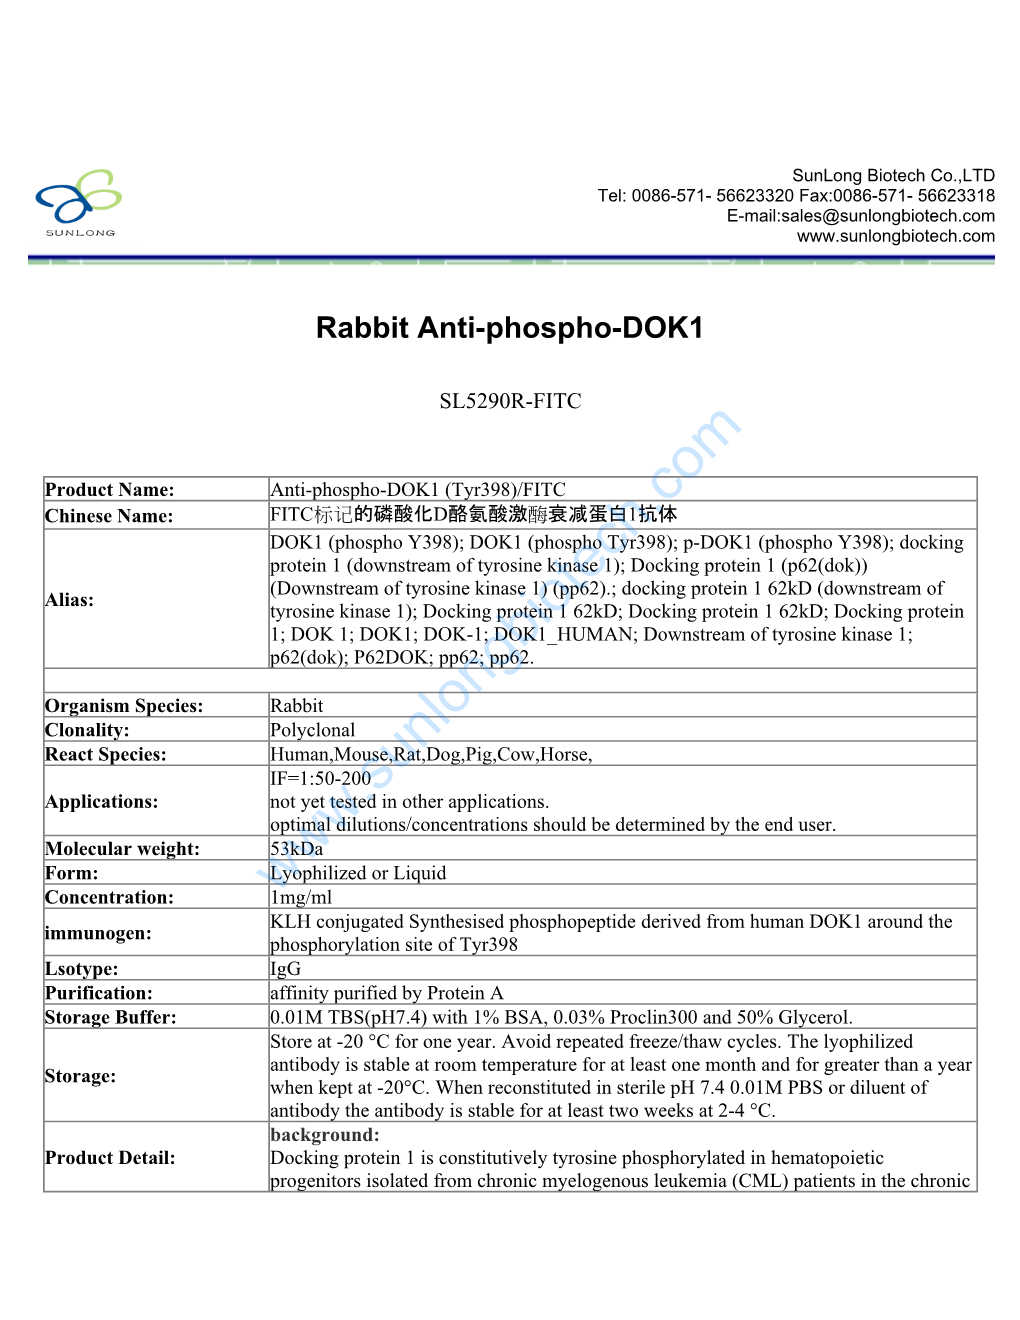 Rabbit Anti-Phospho-DOK1-SL5290R-FITC